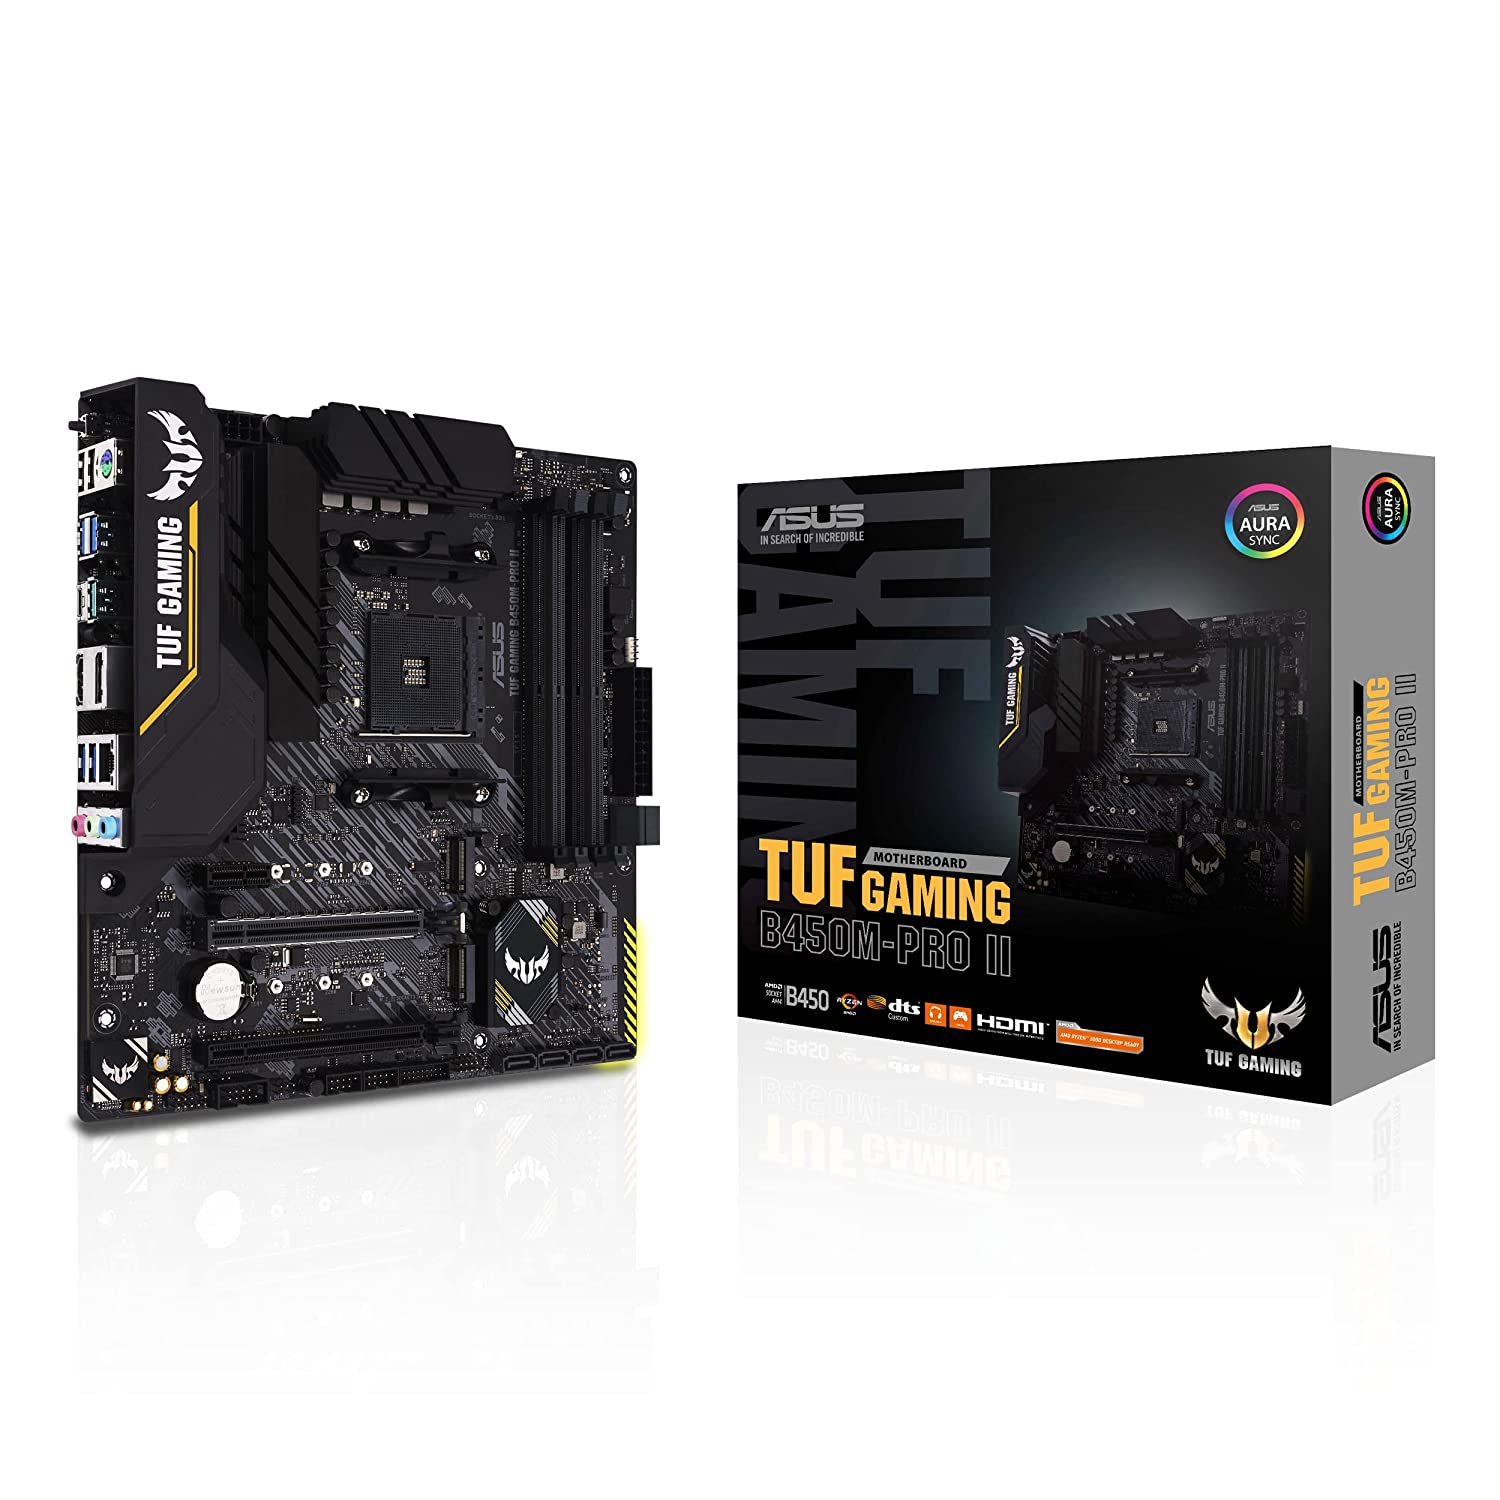 ASUS TUF Gaming B450M-PRO II AMD AM4 Micro ATX Motherboard with Dual M.2, DDR4 RAM Slots, AI Noise-Canceling Microphone, BIOS Flashback, USB 3.2 Gen 2, Addressable Gen 2 RGB Header, and Aura Sync-Motherboard-dealsplant